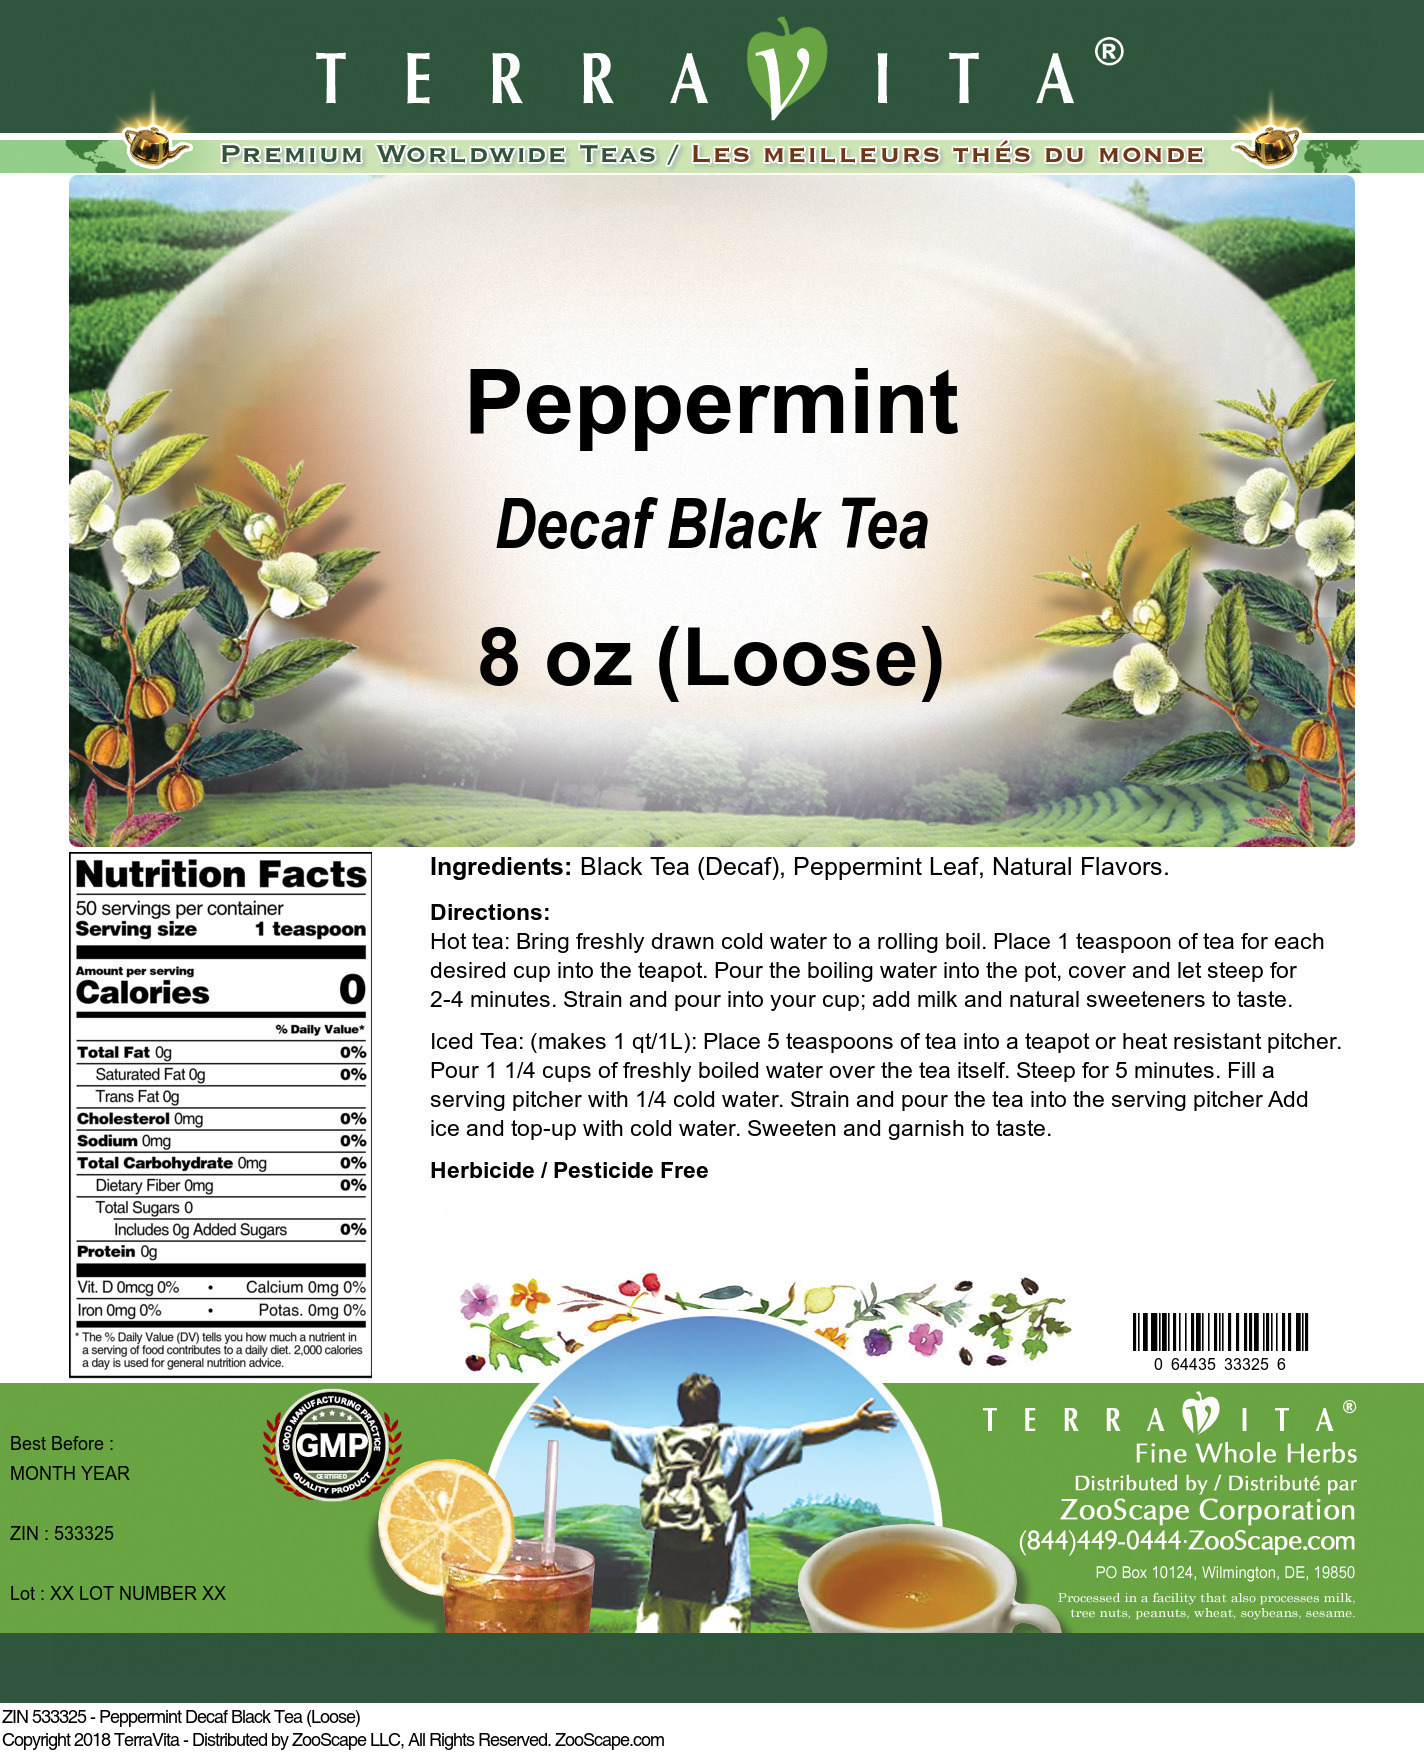 Peppermint Decaf Black Tea (Loose) - Label